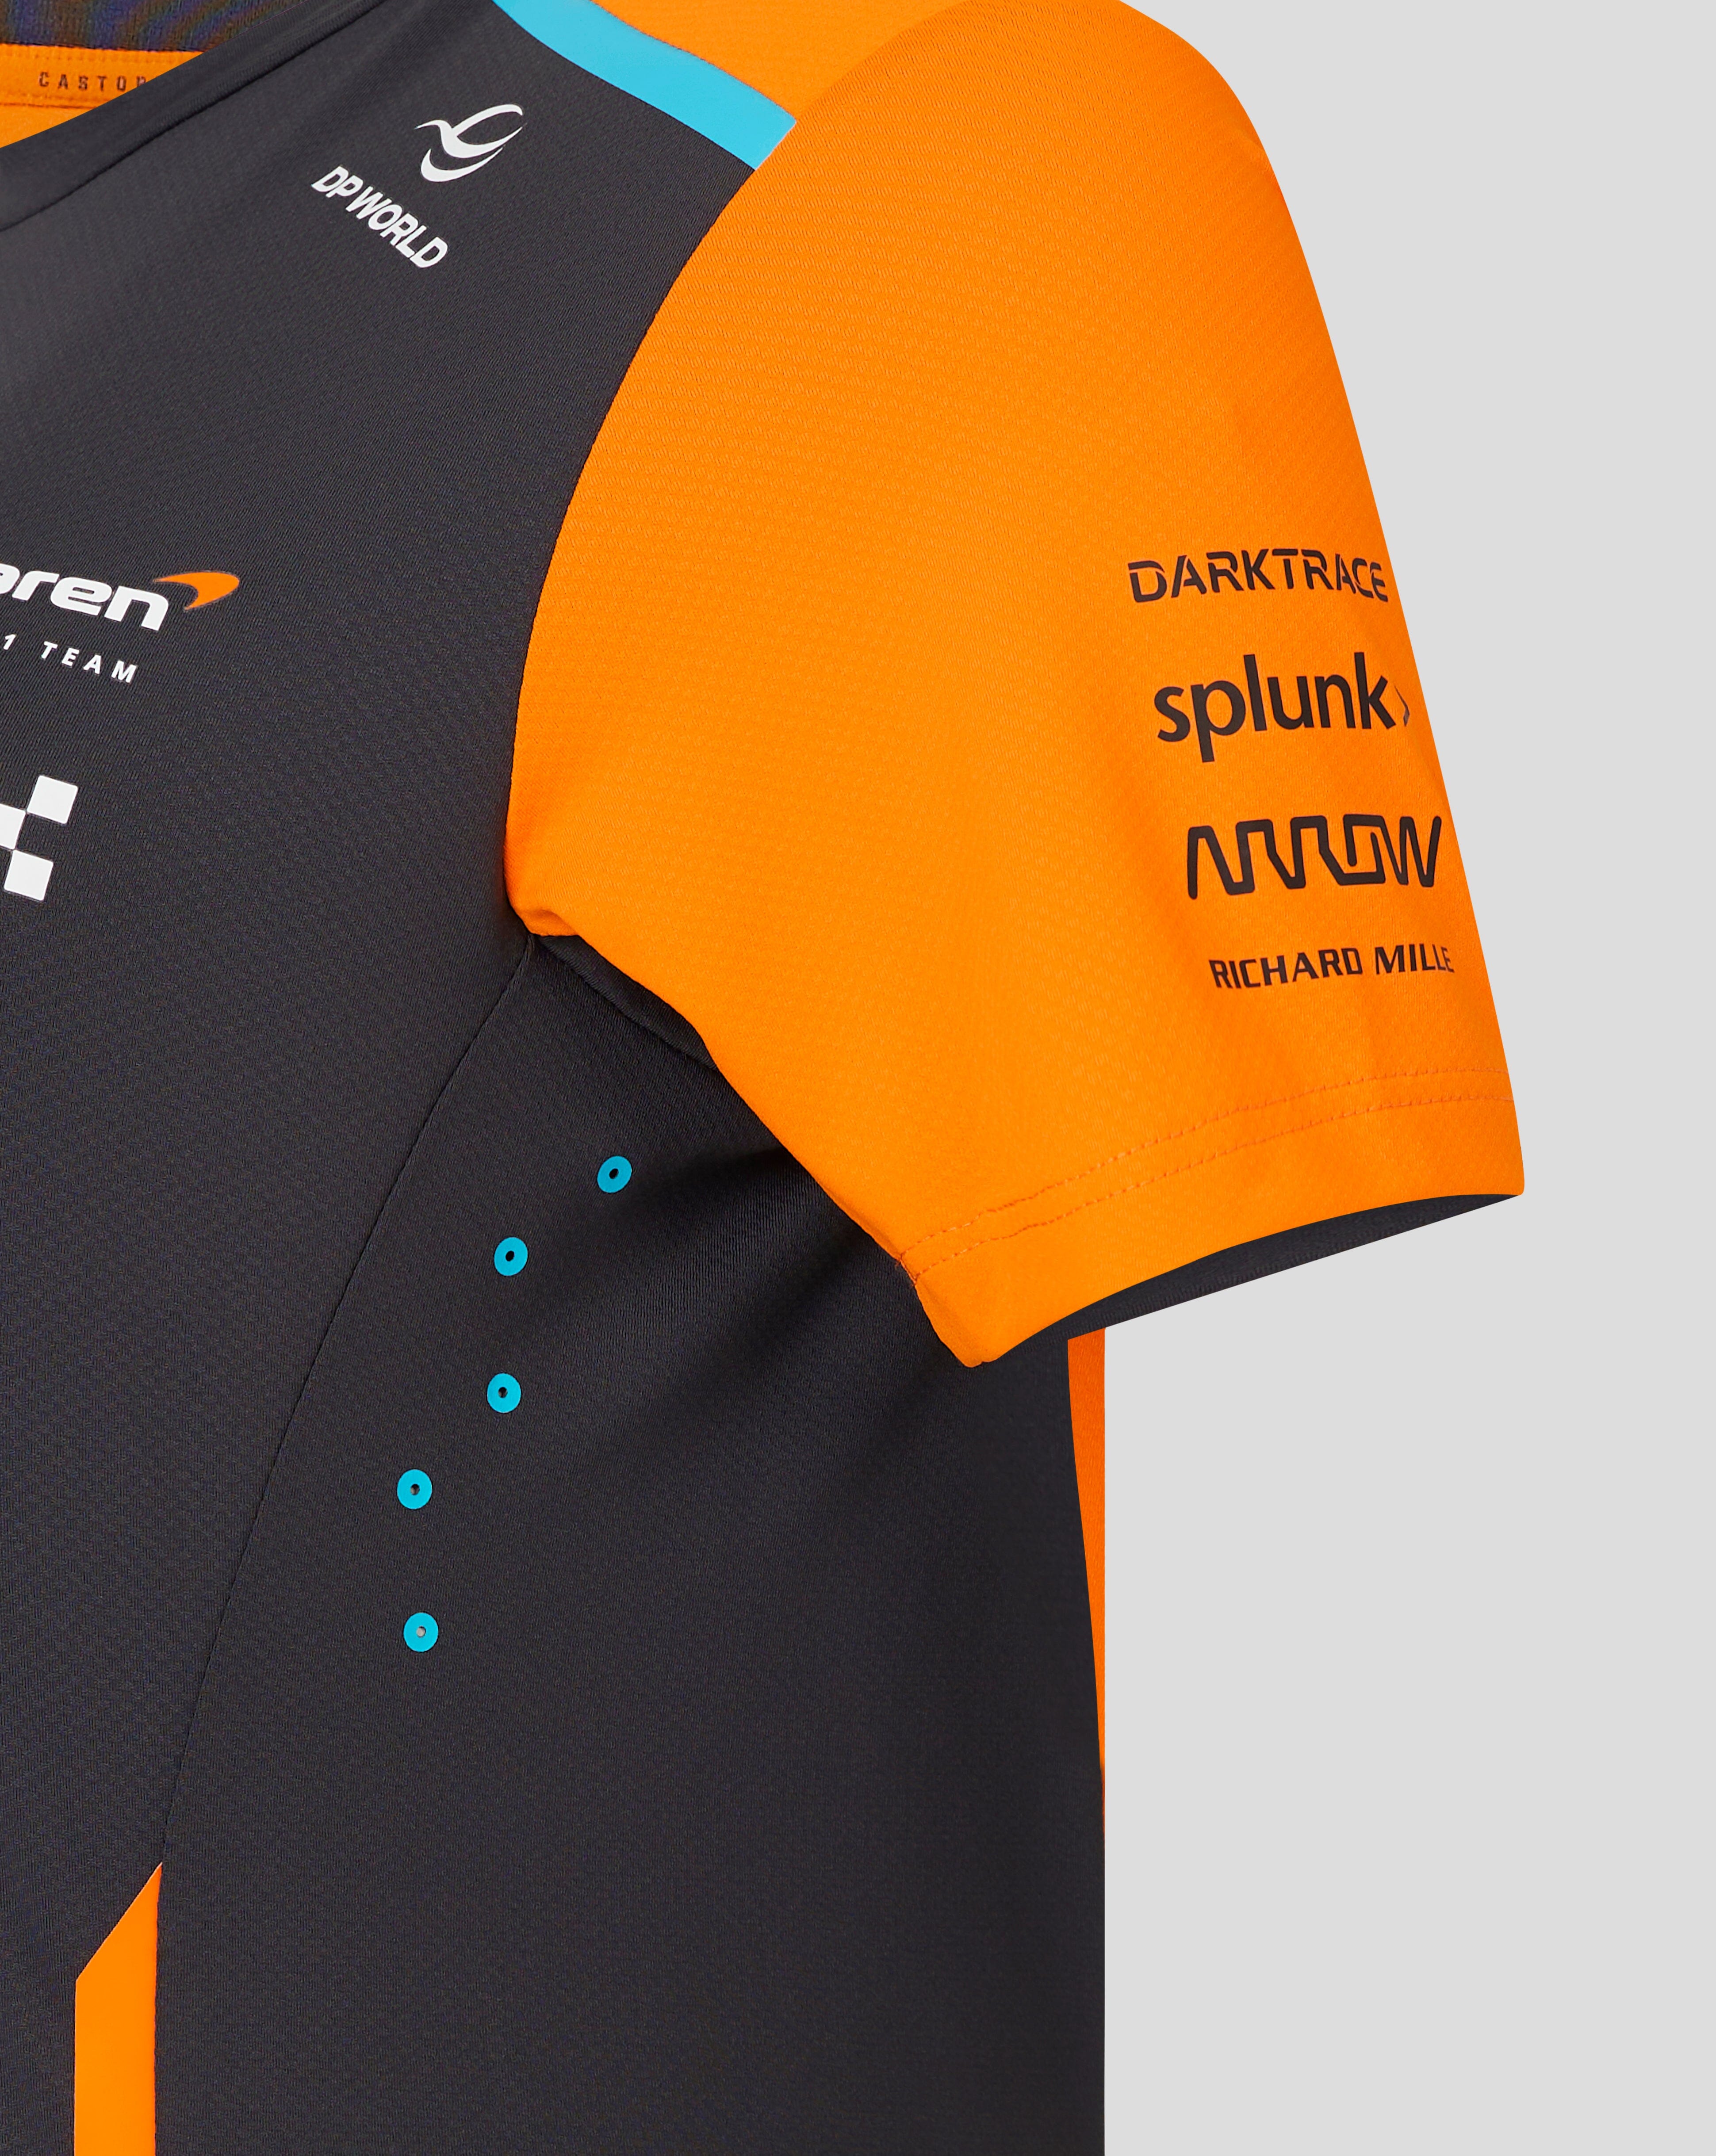 McLaren F1 2024 Women's Team T-Shirt - Papaya/Phantom